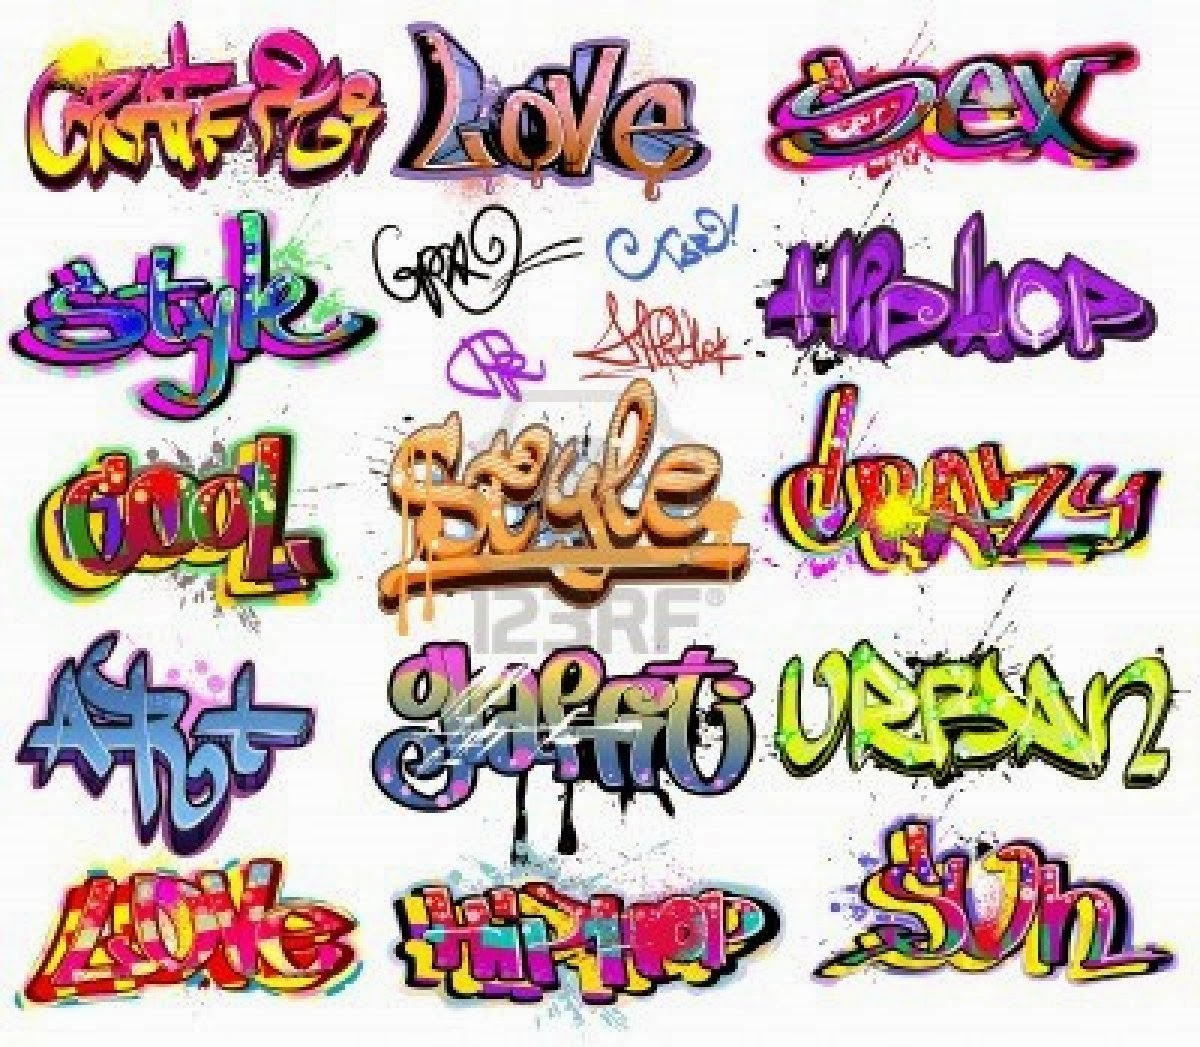 Graffiti Wall Graffiti words cool